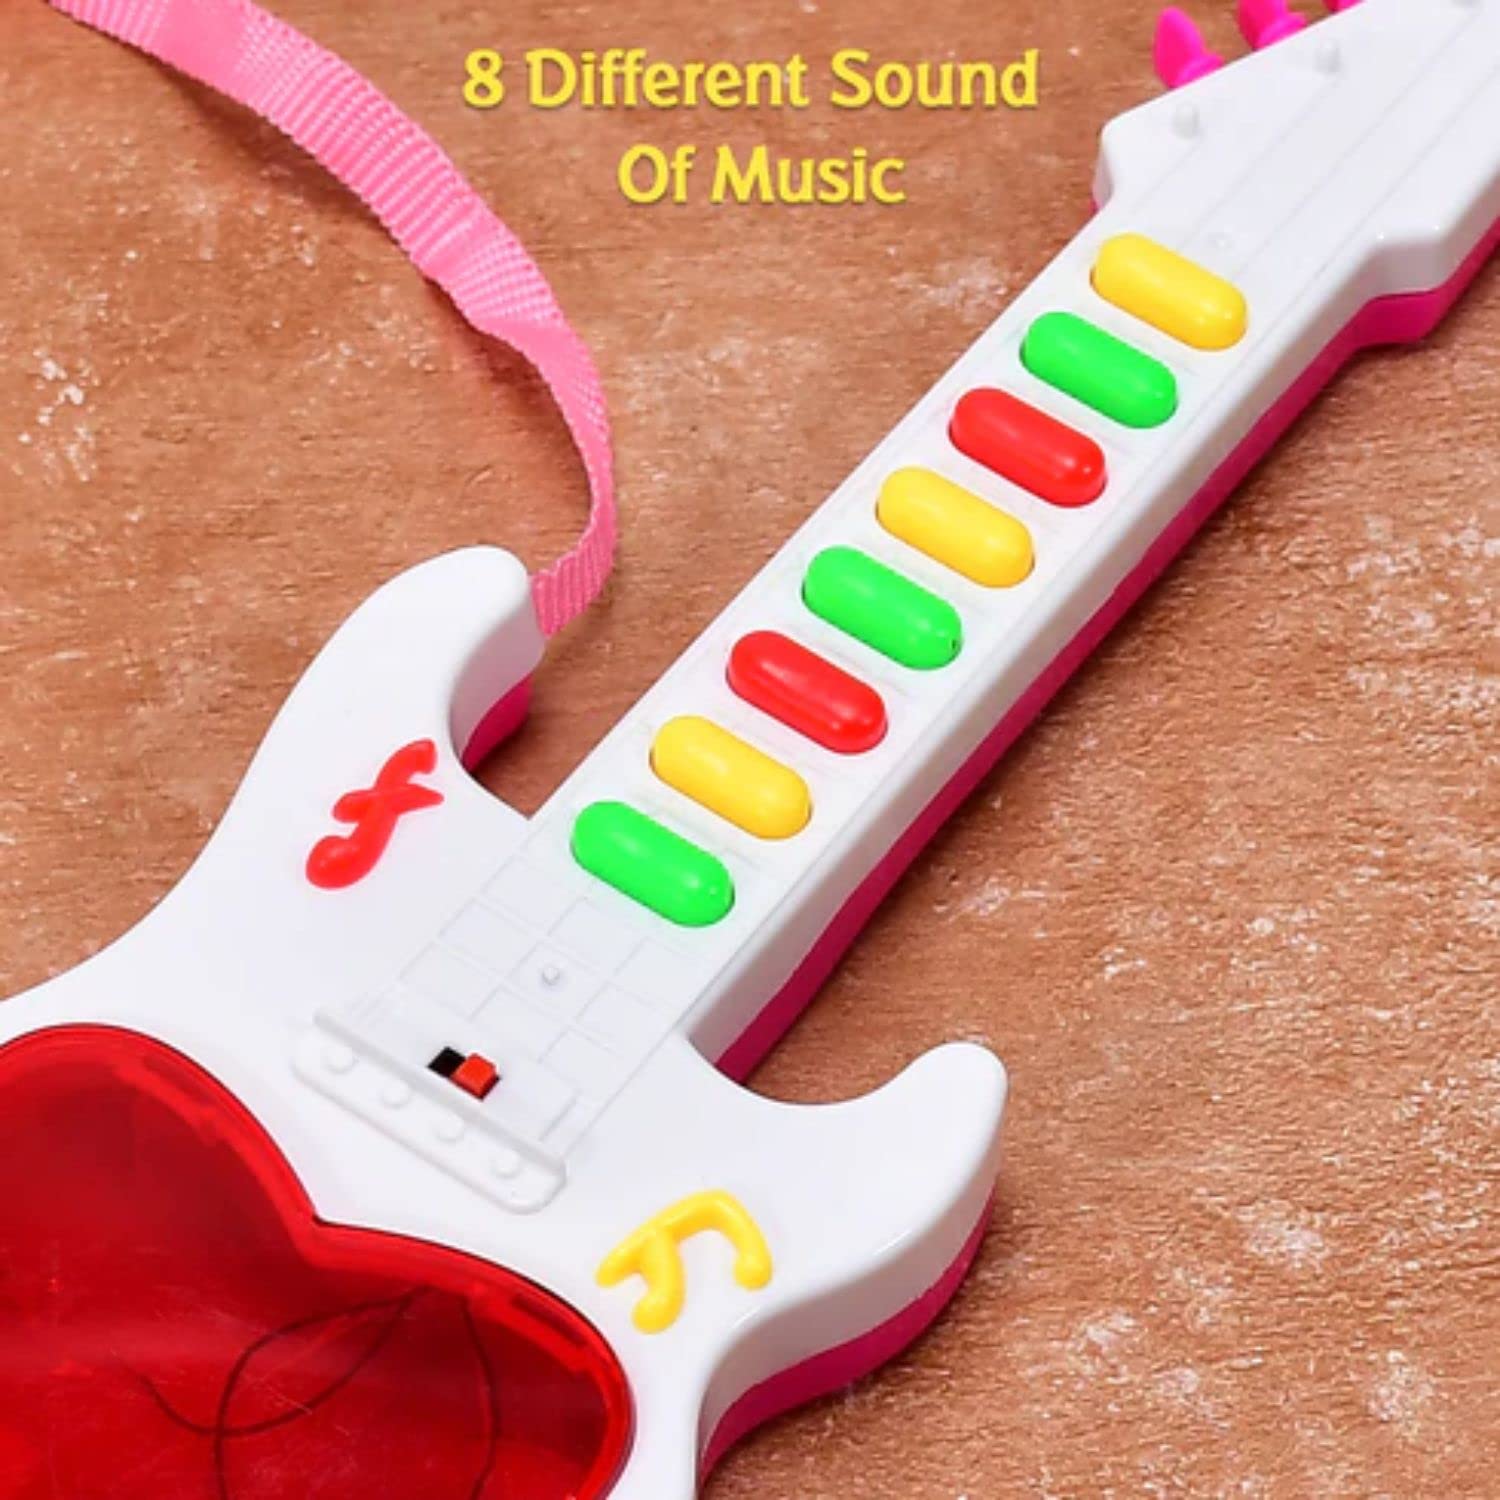 KIDS MANDI Musical Mini Guitar Toy with Rhymes Sound